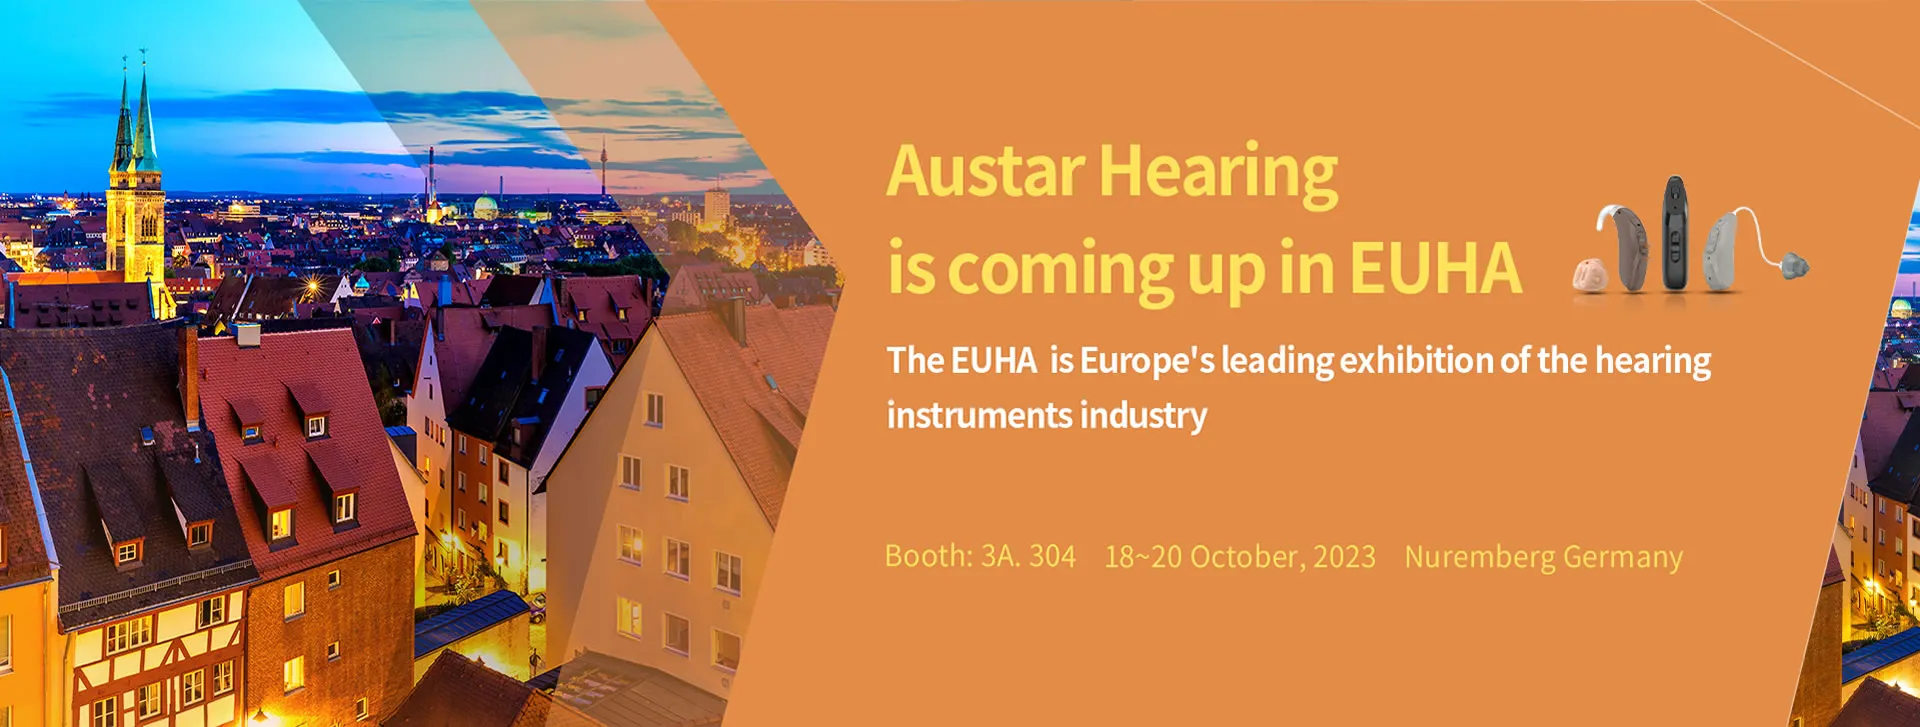 AUSTAR Hearing at EUHA exhibition in Nuremberg, Germany 2023